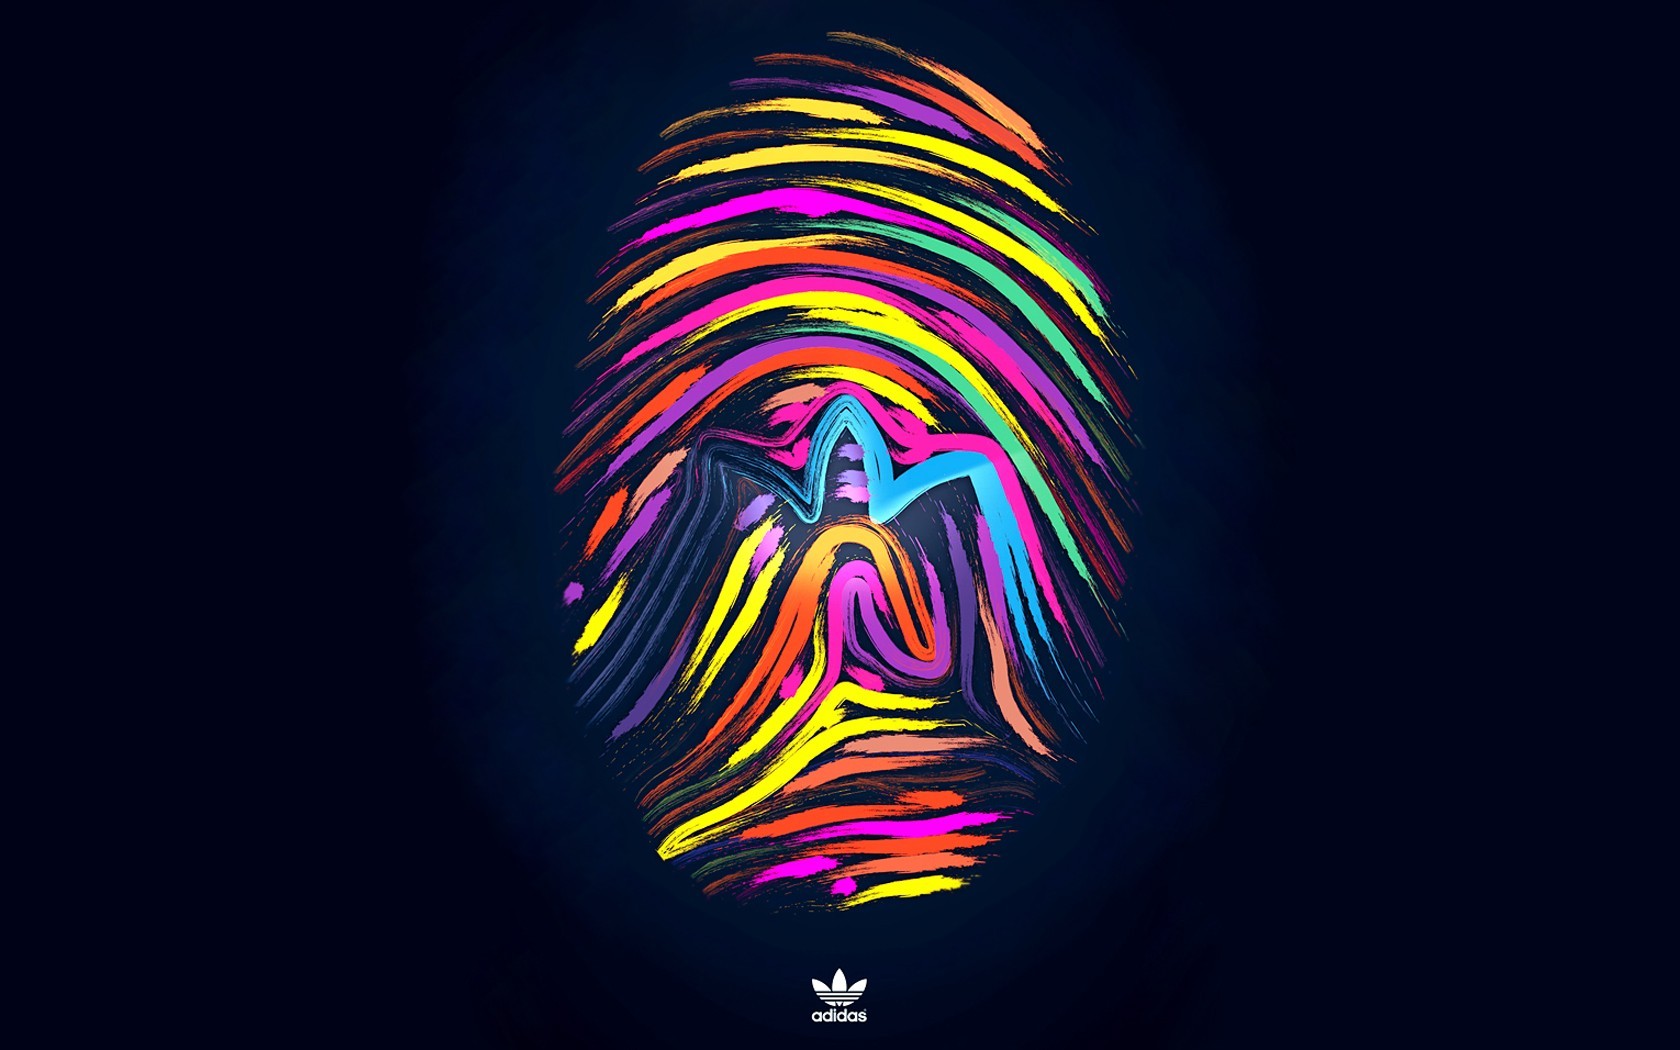 General 1680x1050 Adidas logo blue colorful fingerprint blue background brand digital art dark background artwork